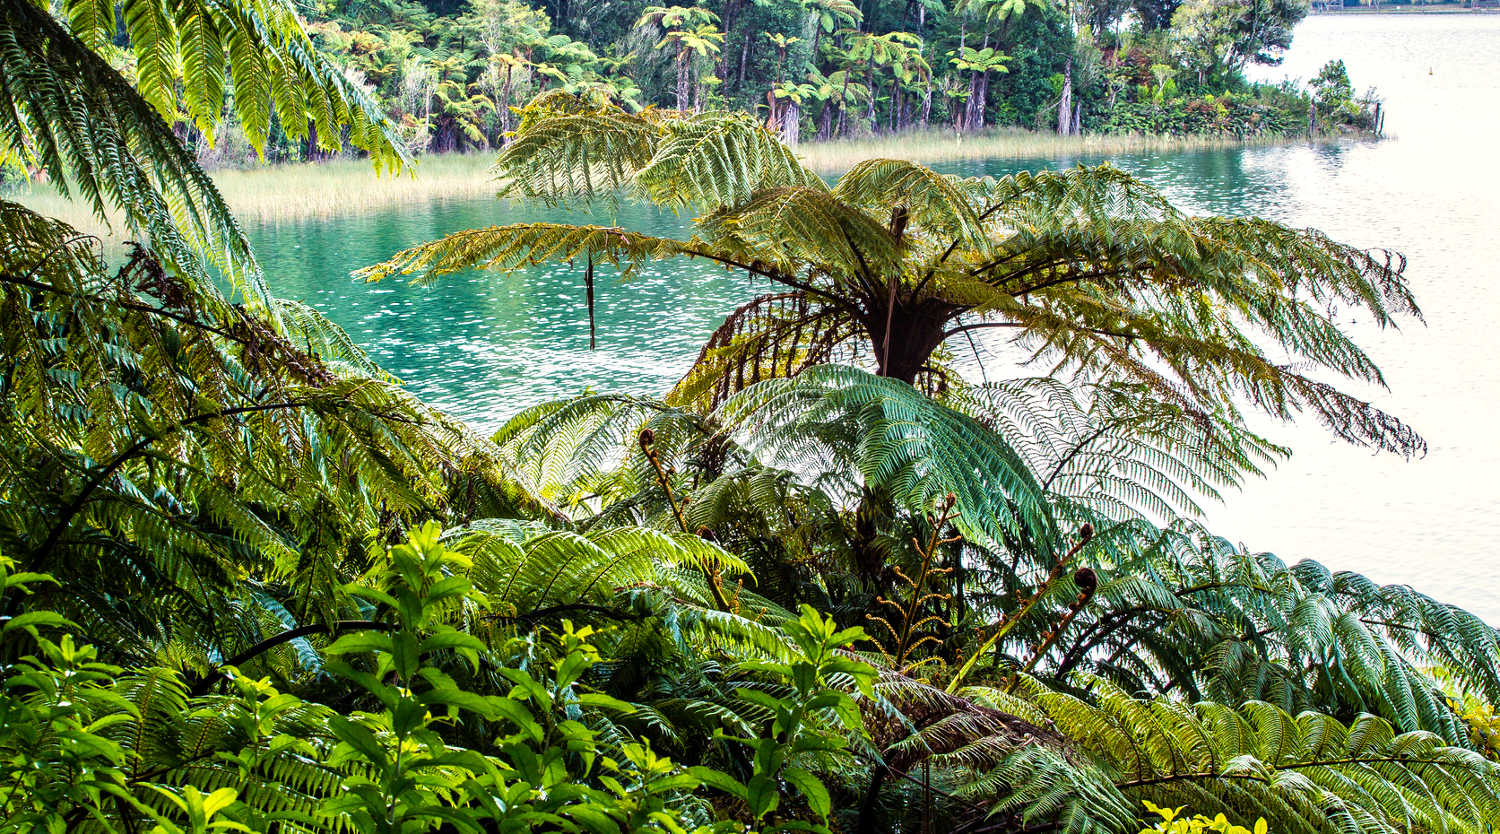 Views from the Blue lake scenic walk in Rotorua, New Zealand